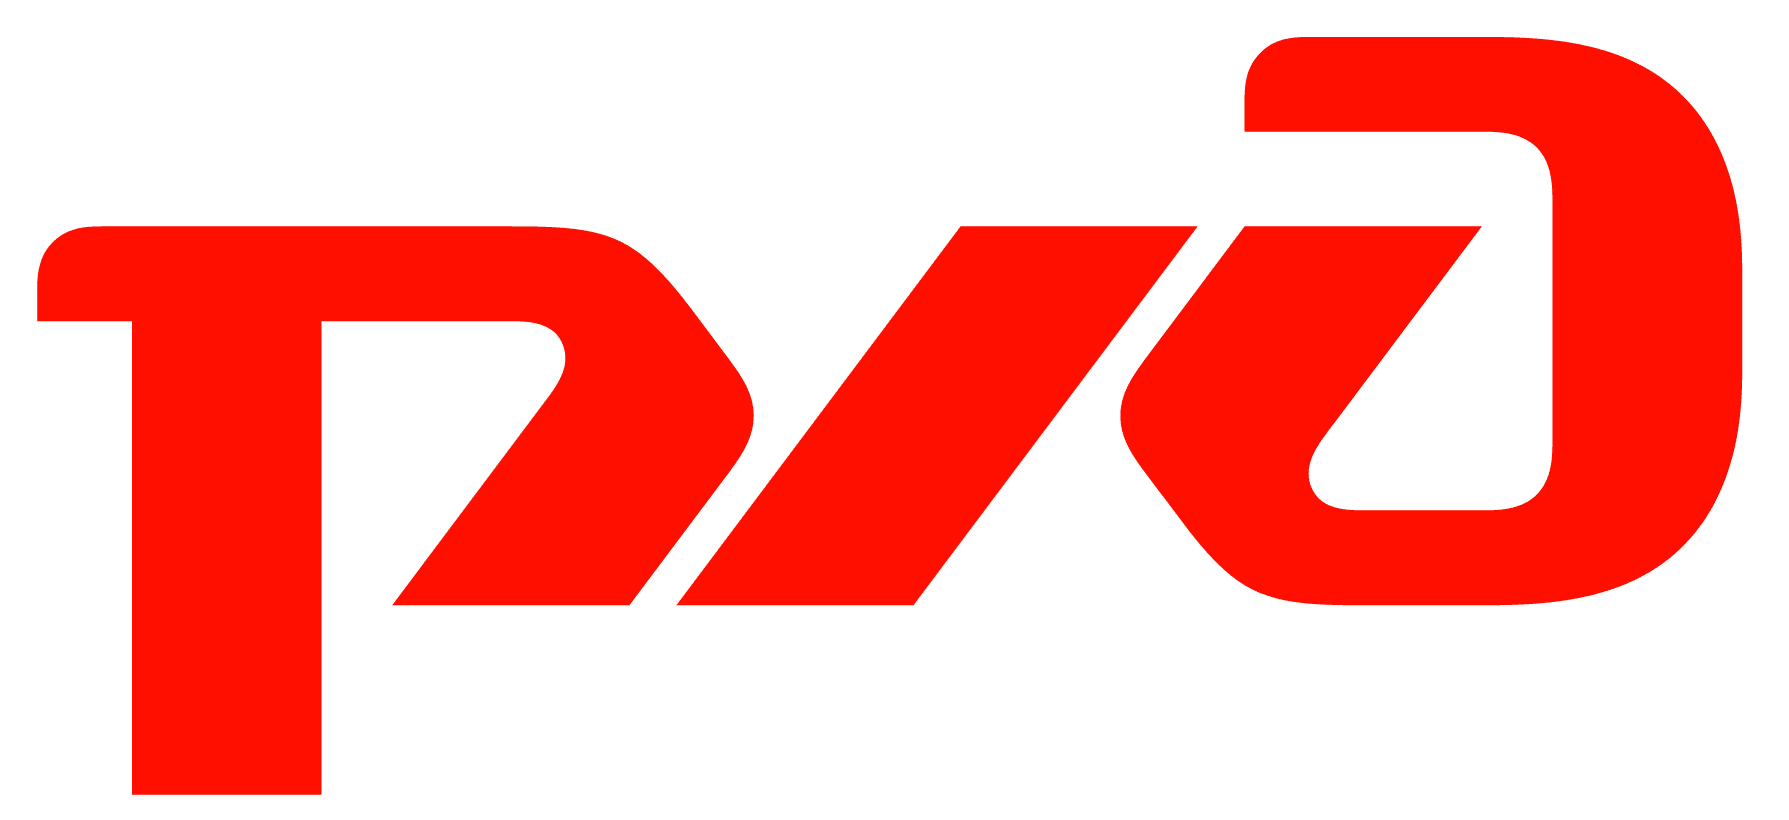 Ржд логотип